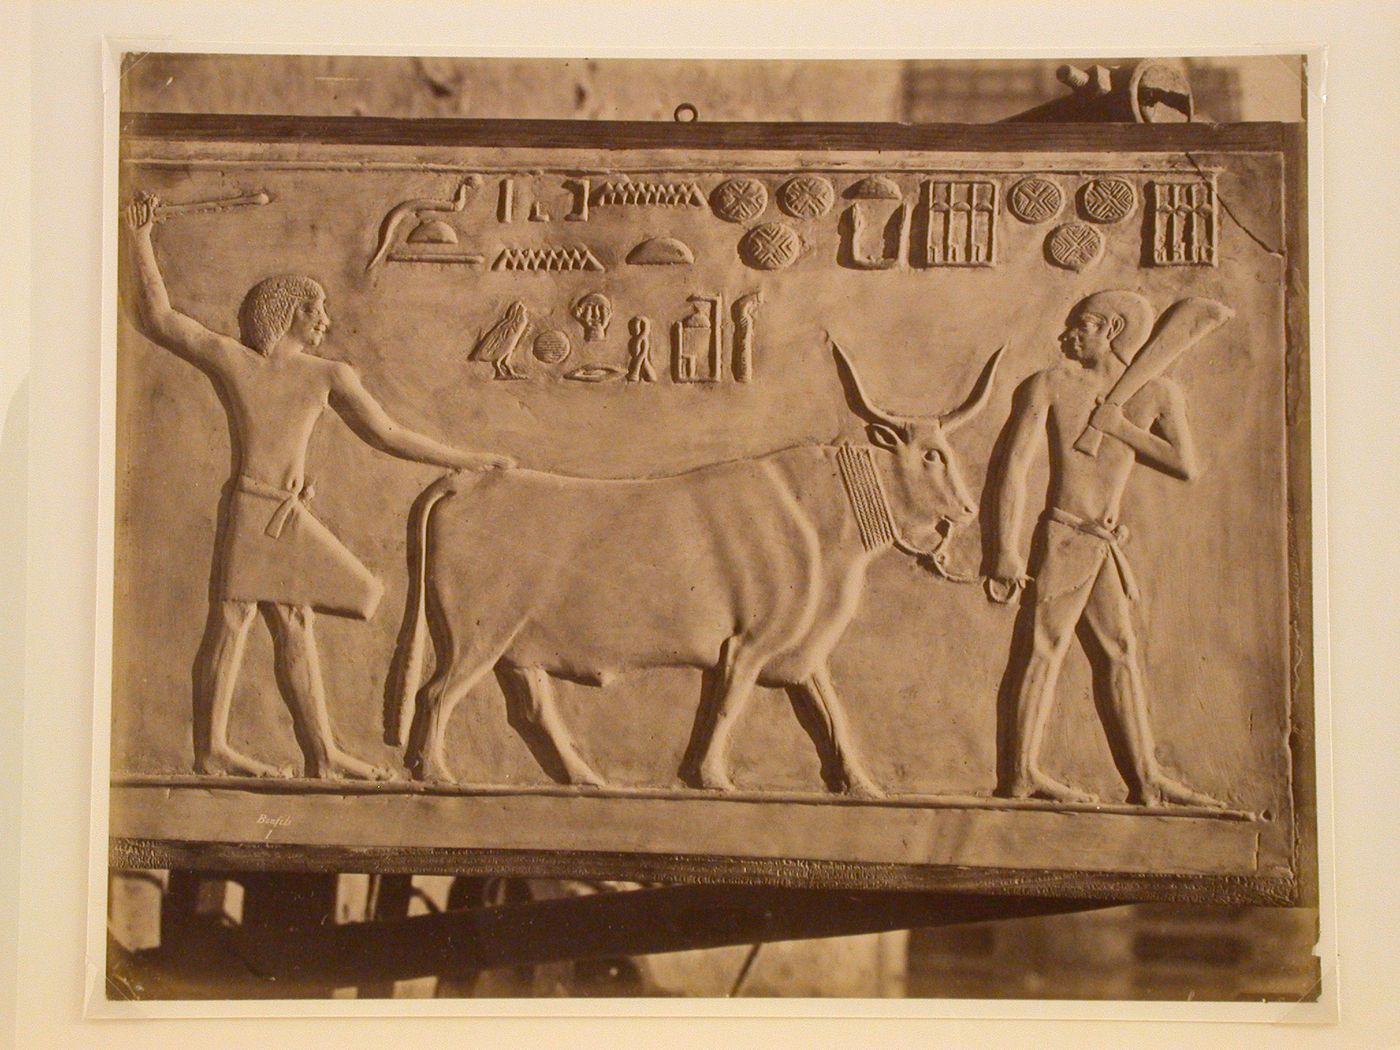 Vache trouve a Sakara, Egypte